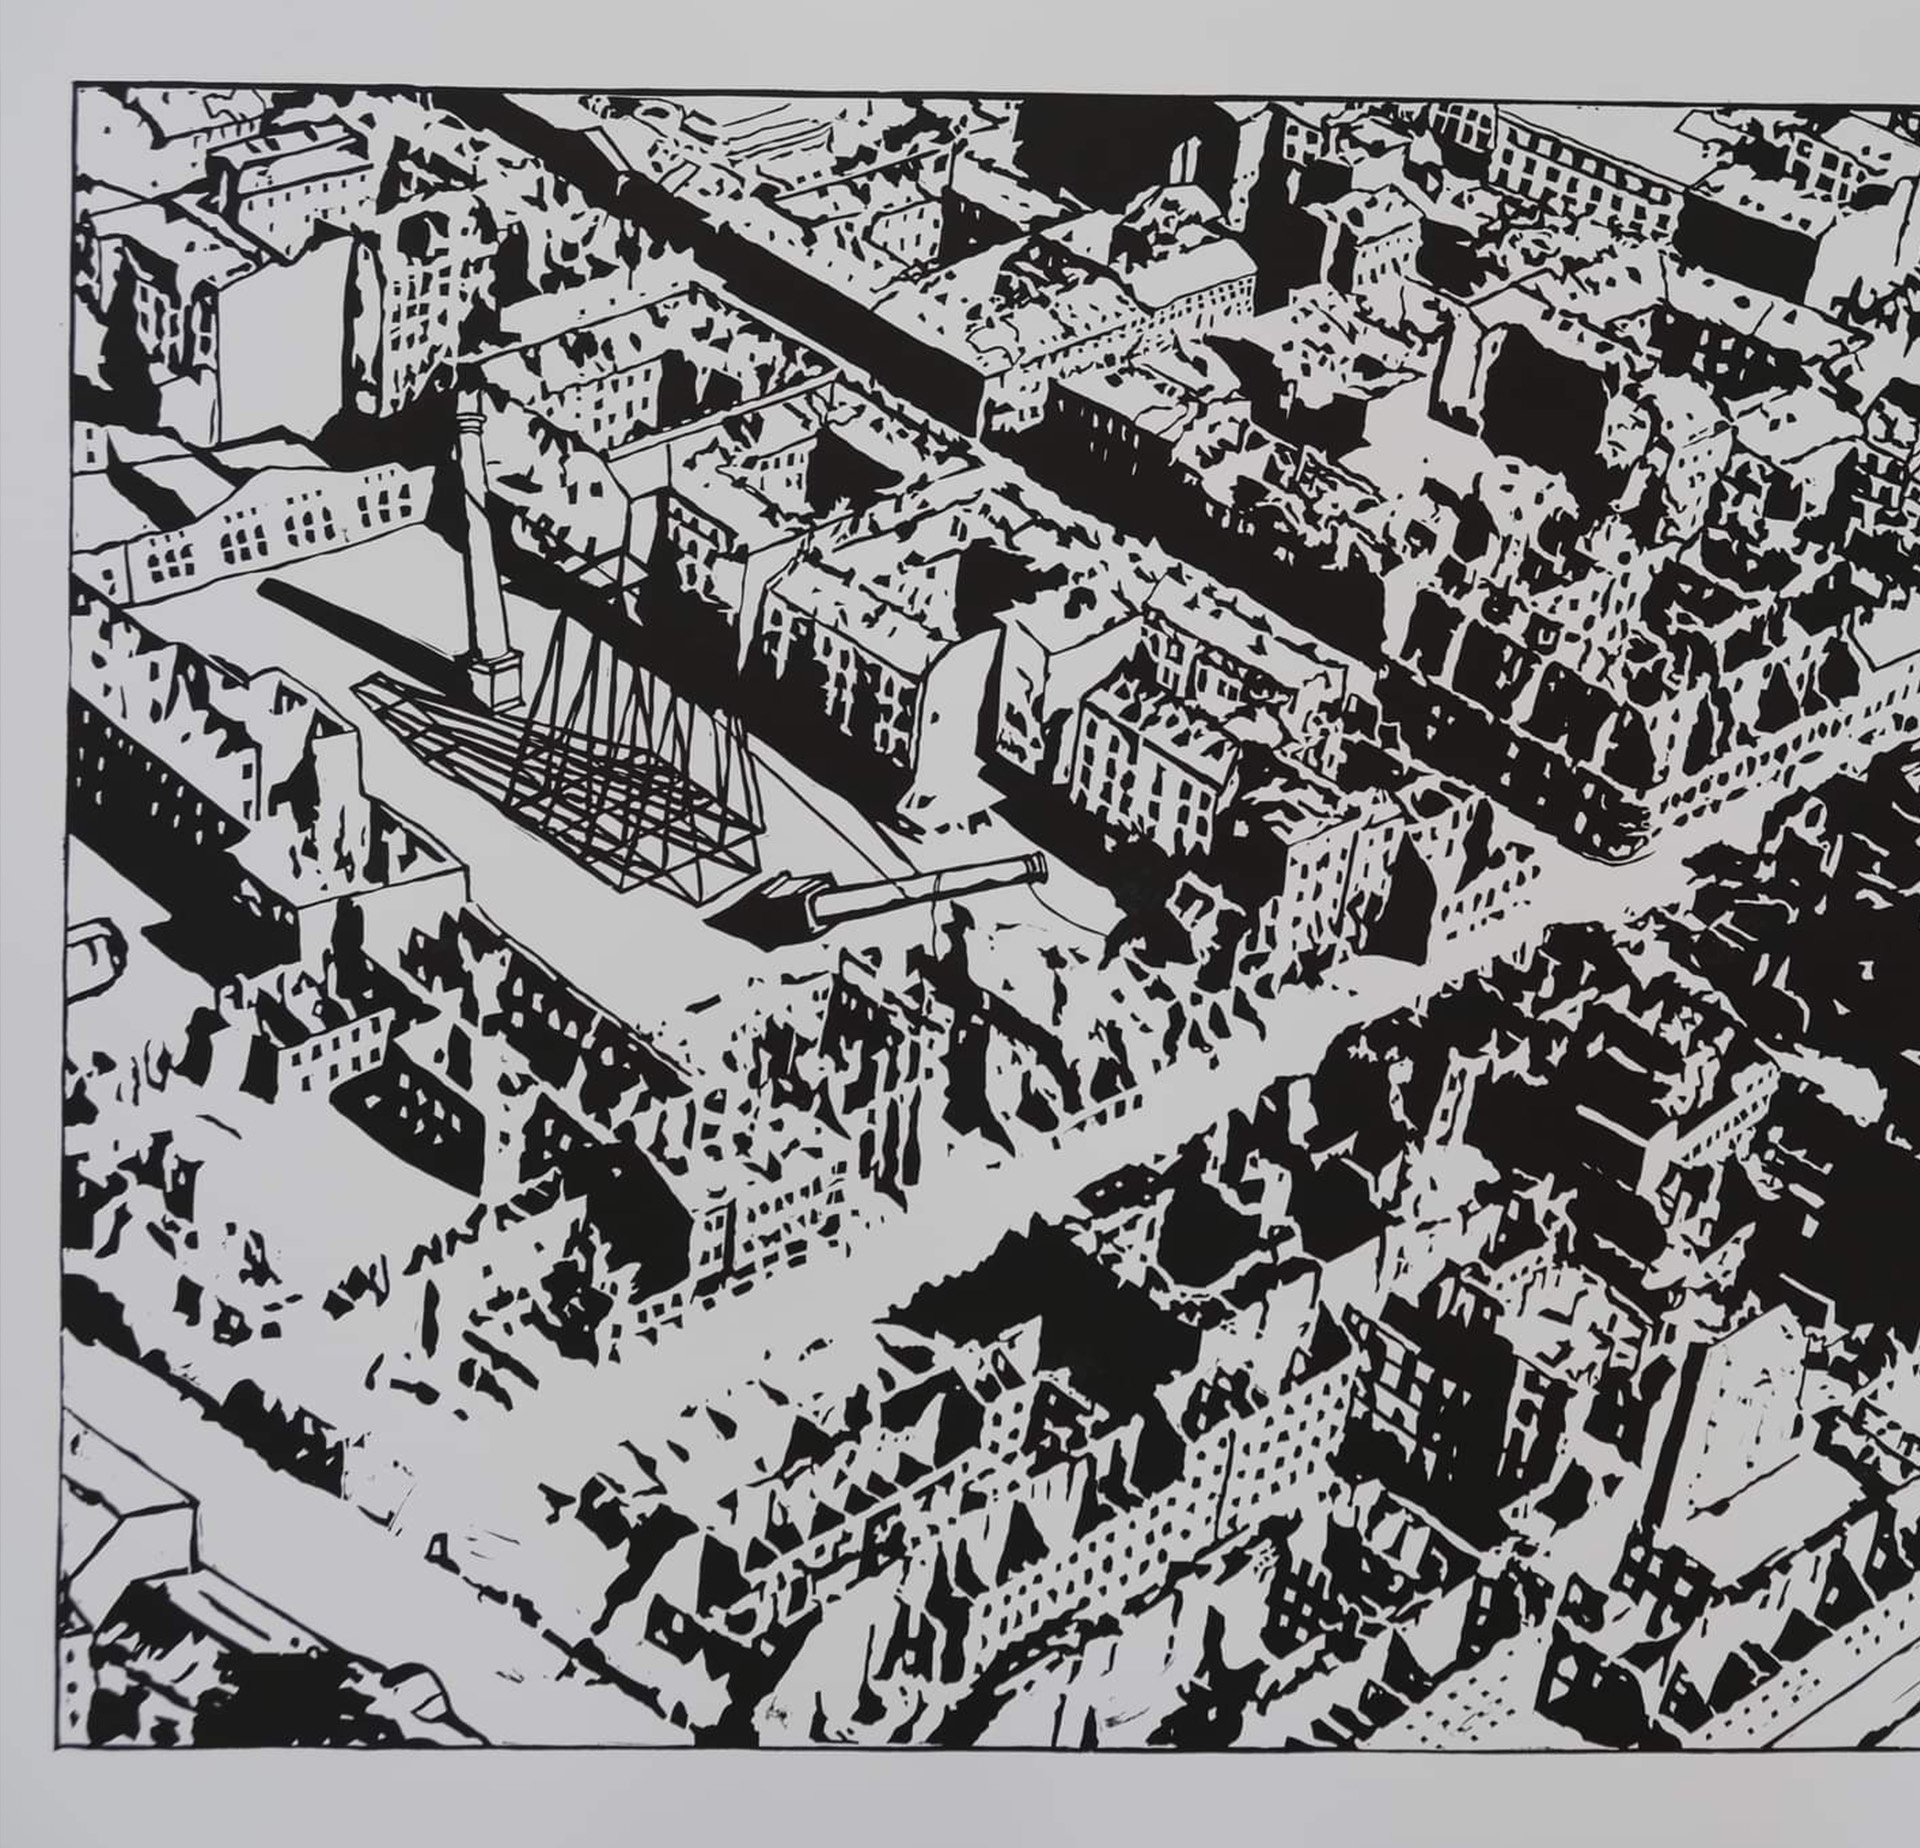 BA Fine Art work by Tymoteusz Suszycki showing a Lino printed black and white cityscape.